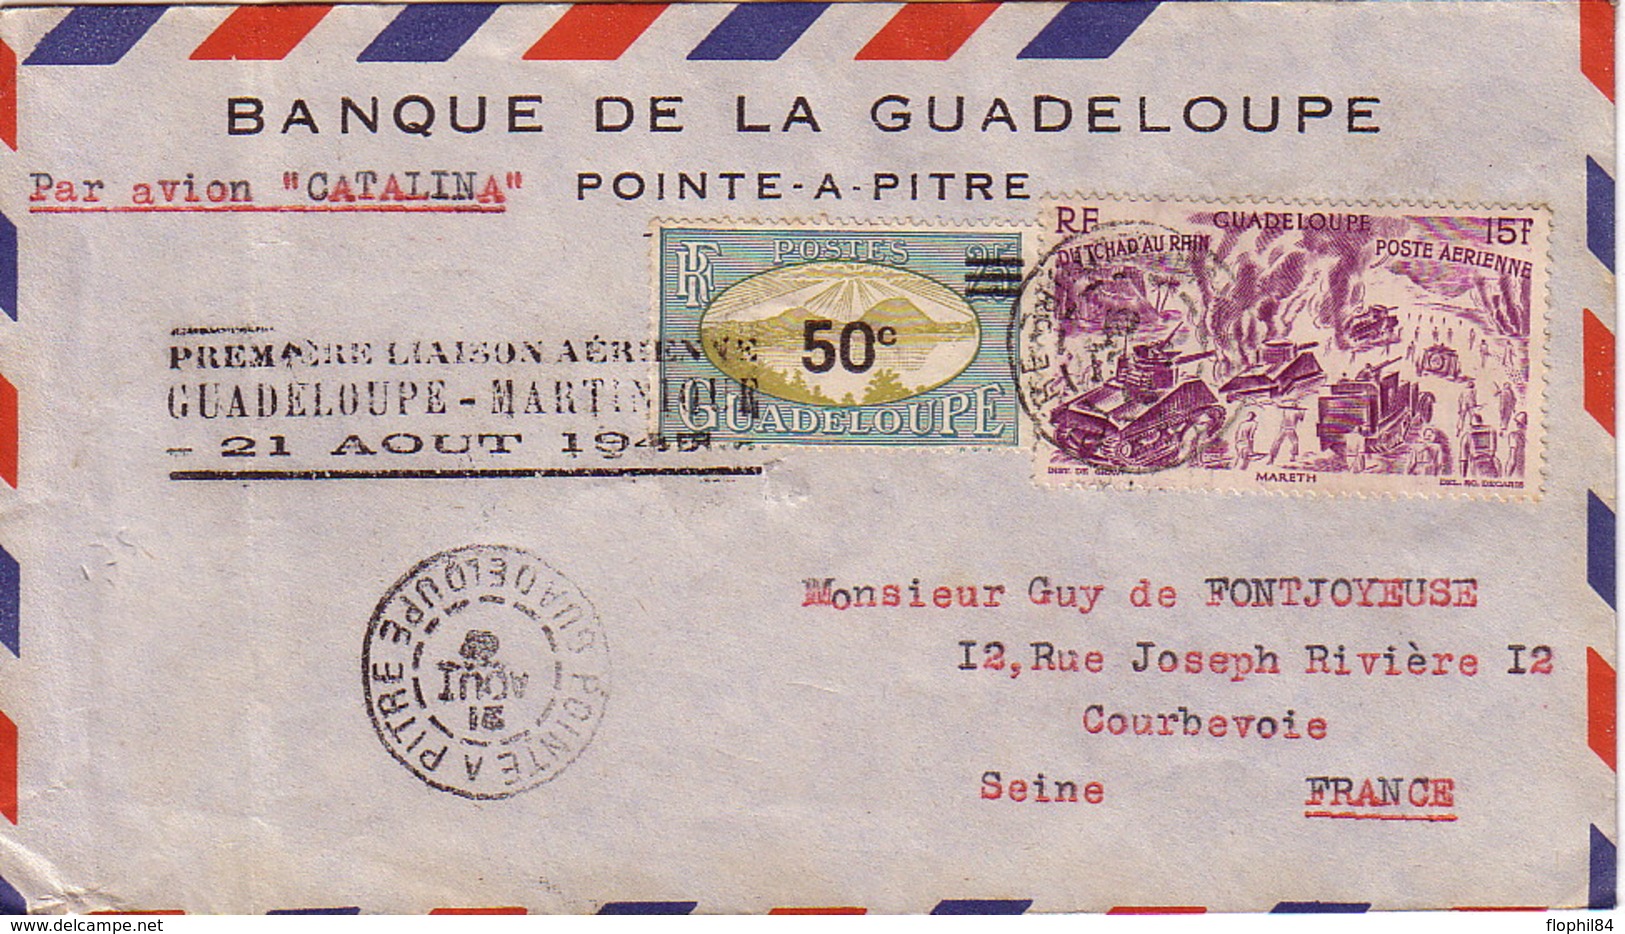 GUADELOUPE - POINTE A PITRE - 1er LIAISON AERIENNE GUADELOUPE-MARTINIQUE - 21 AOUT 1947. - Lettres & Documents